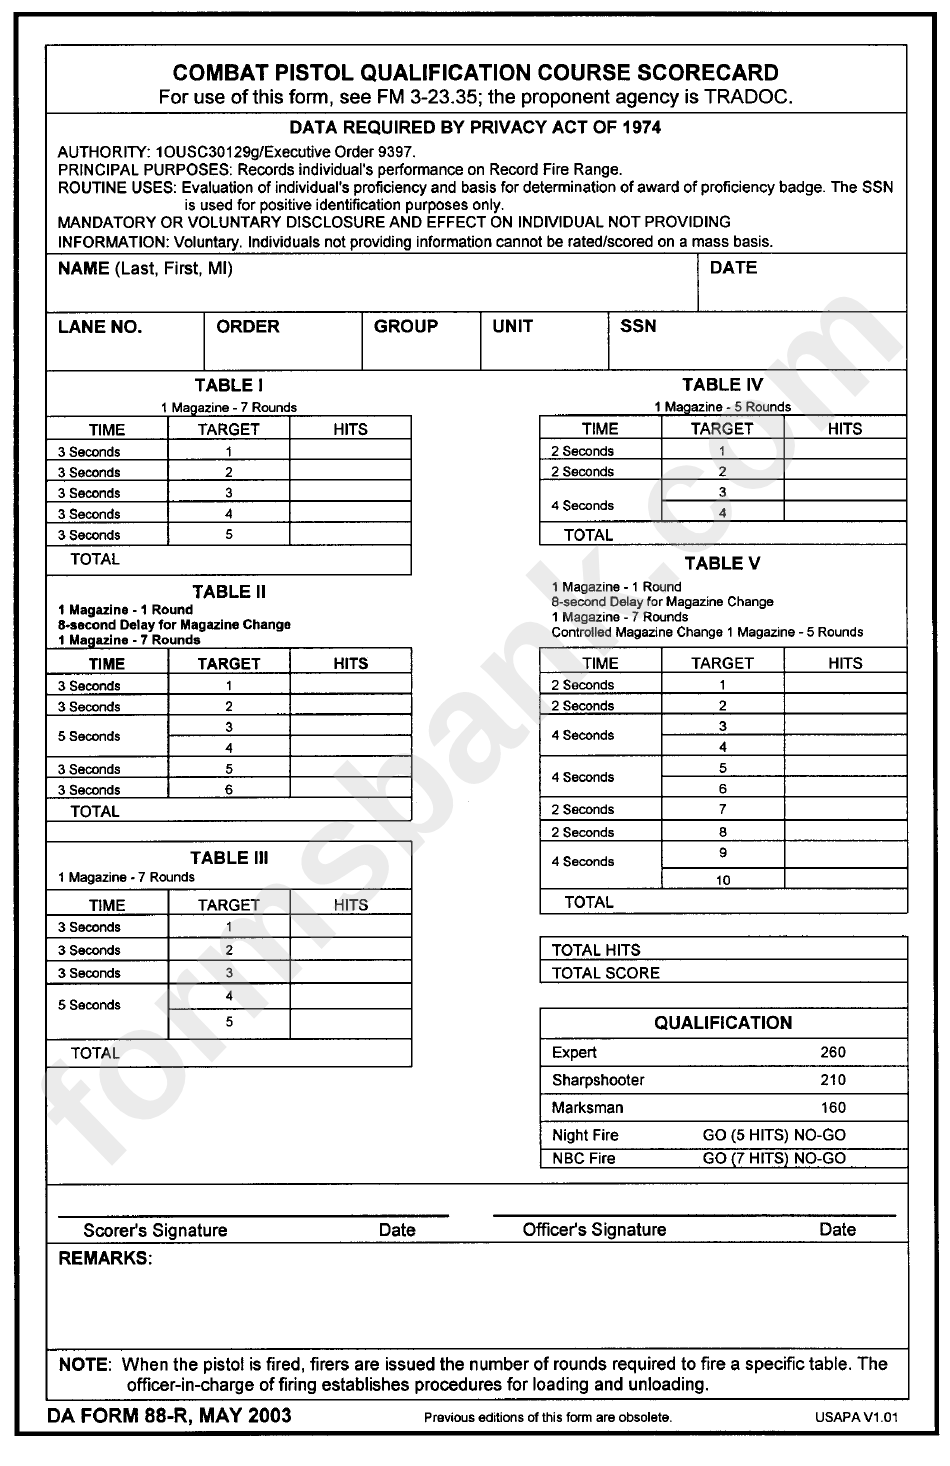 Form 88-R - Combat Pistol Qualification Course Scorecard